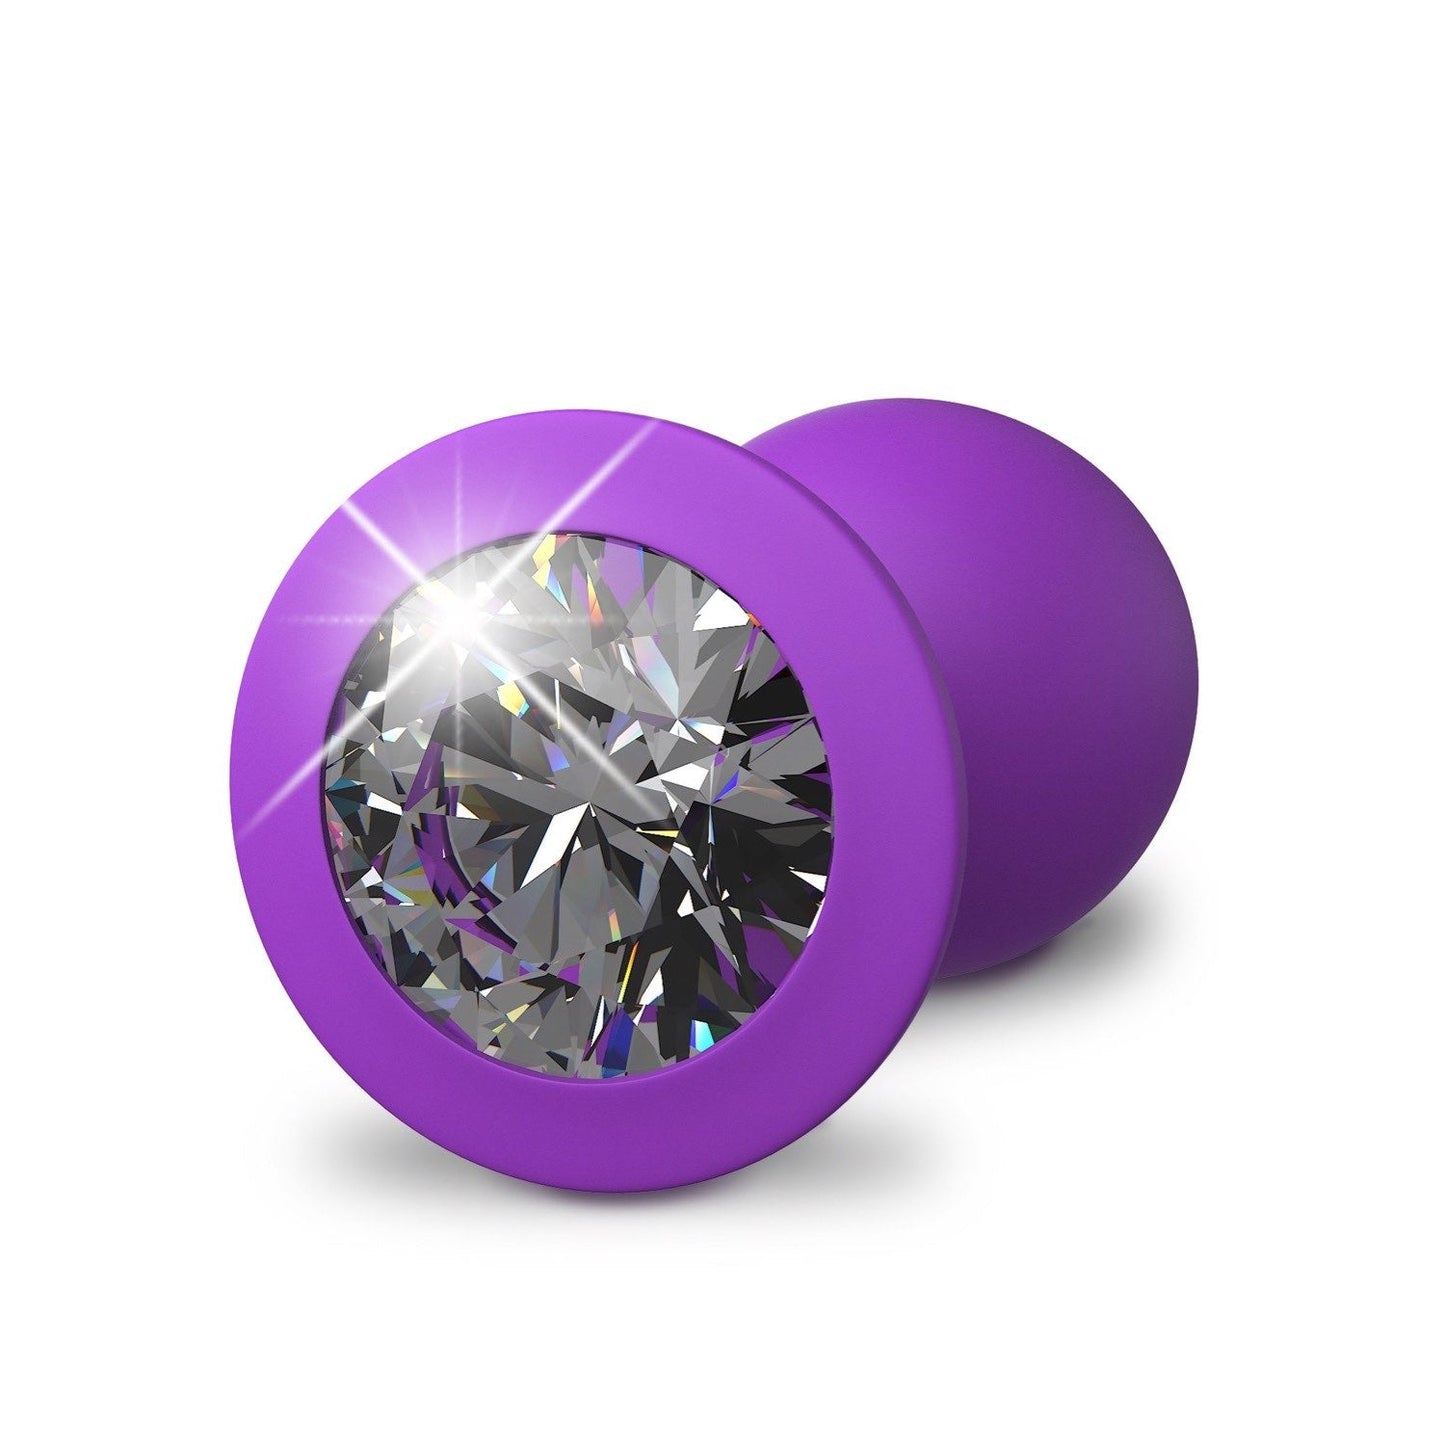 Little Gem Small Plug - Purple 7.2 cm Butt Plug with Jewel Base